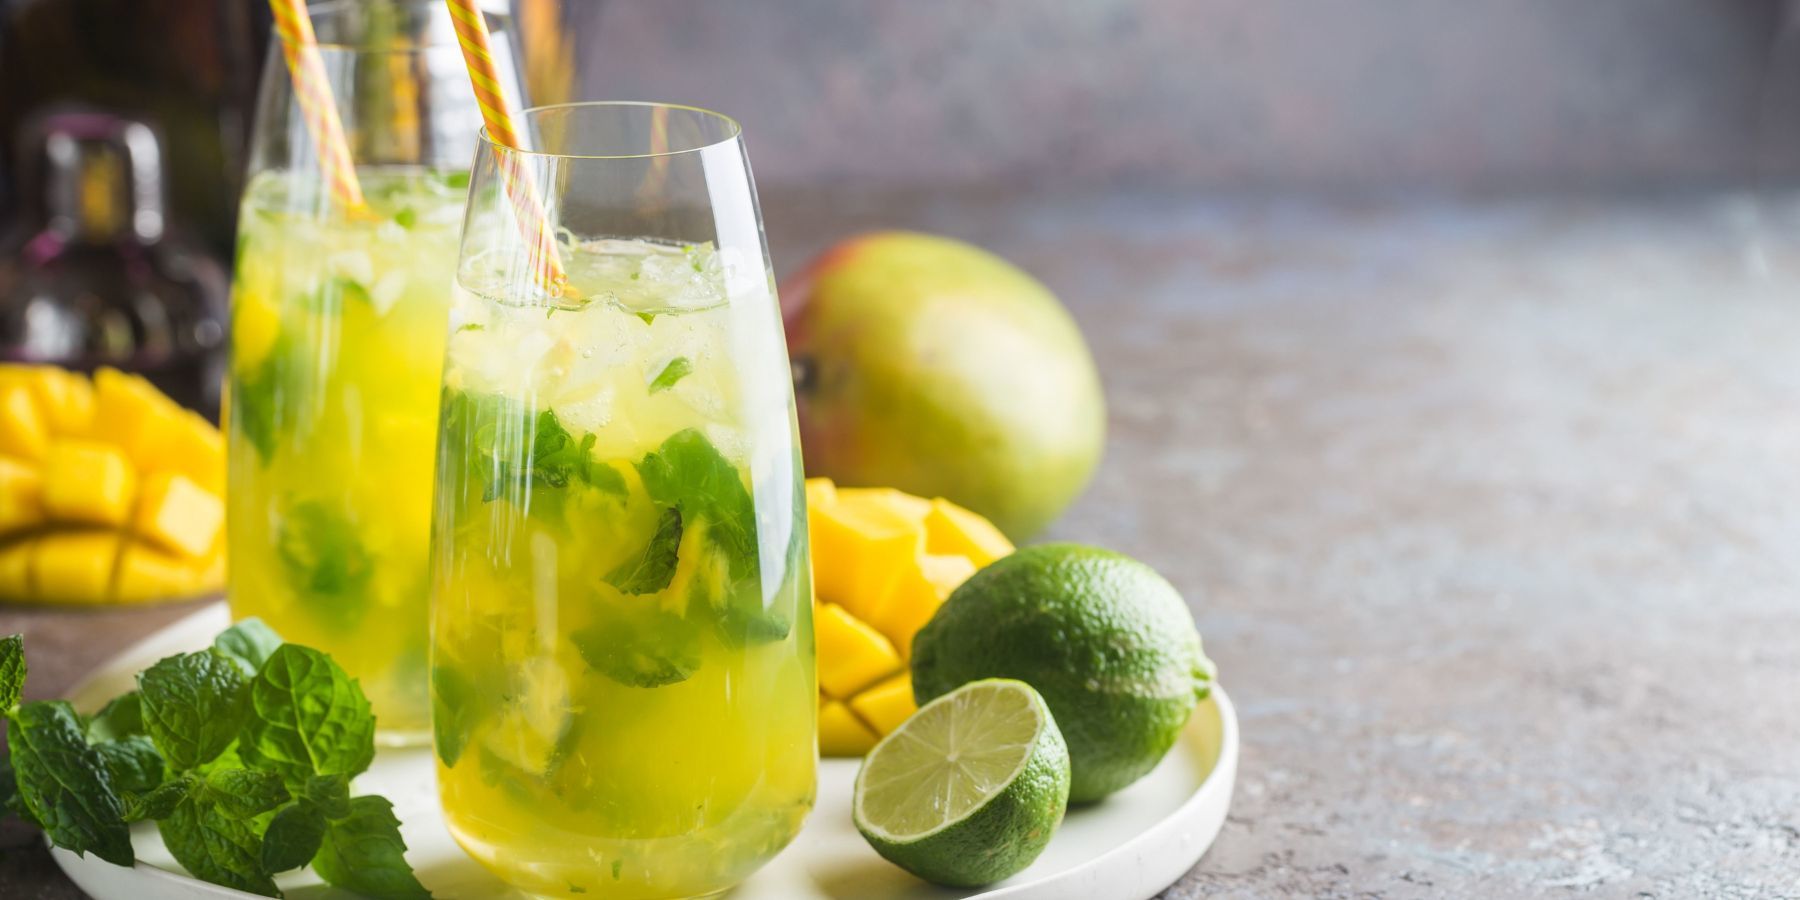 Dash Soda Water Limes and Garden Mint – TTSOMMELIER